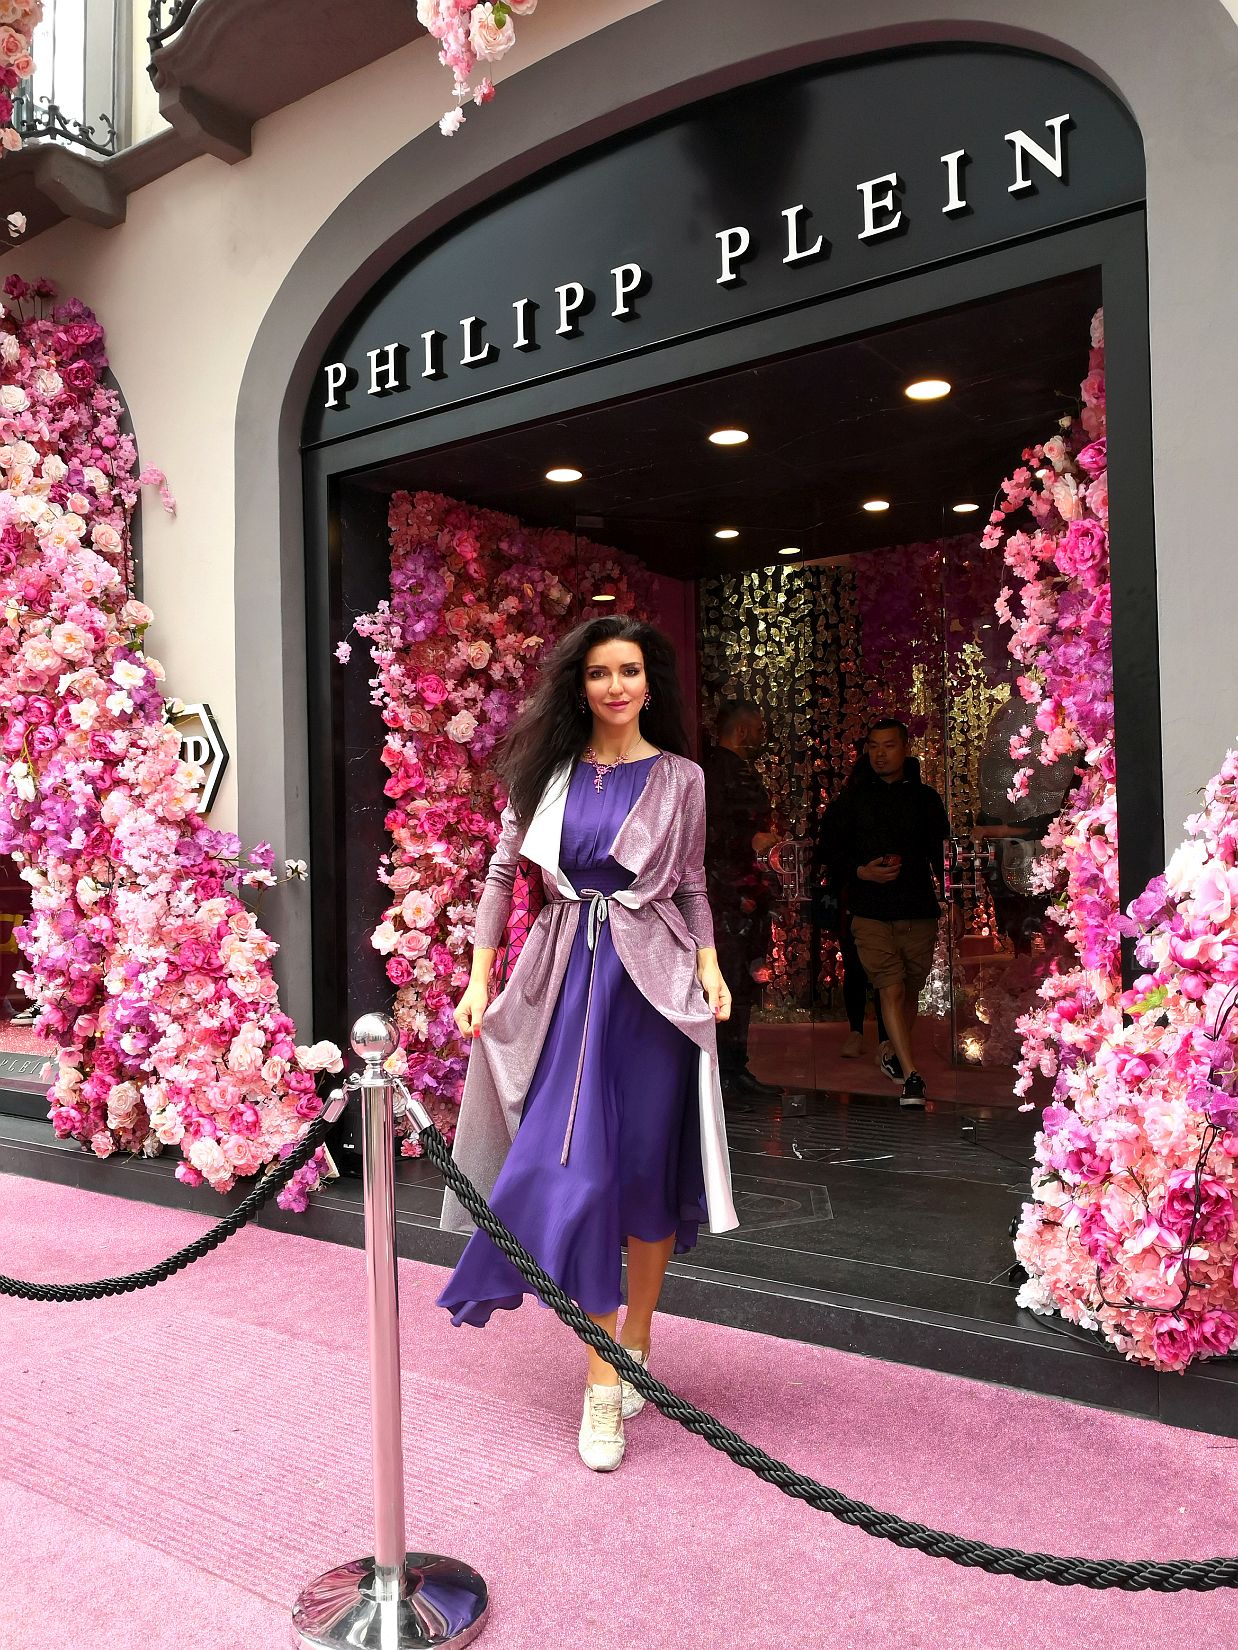 Philipp Plein brings a show of excess to Milan Fashion Week